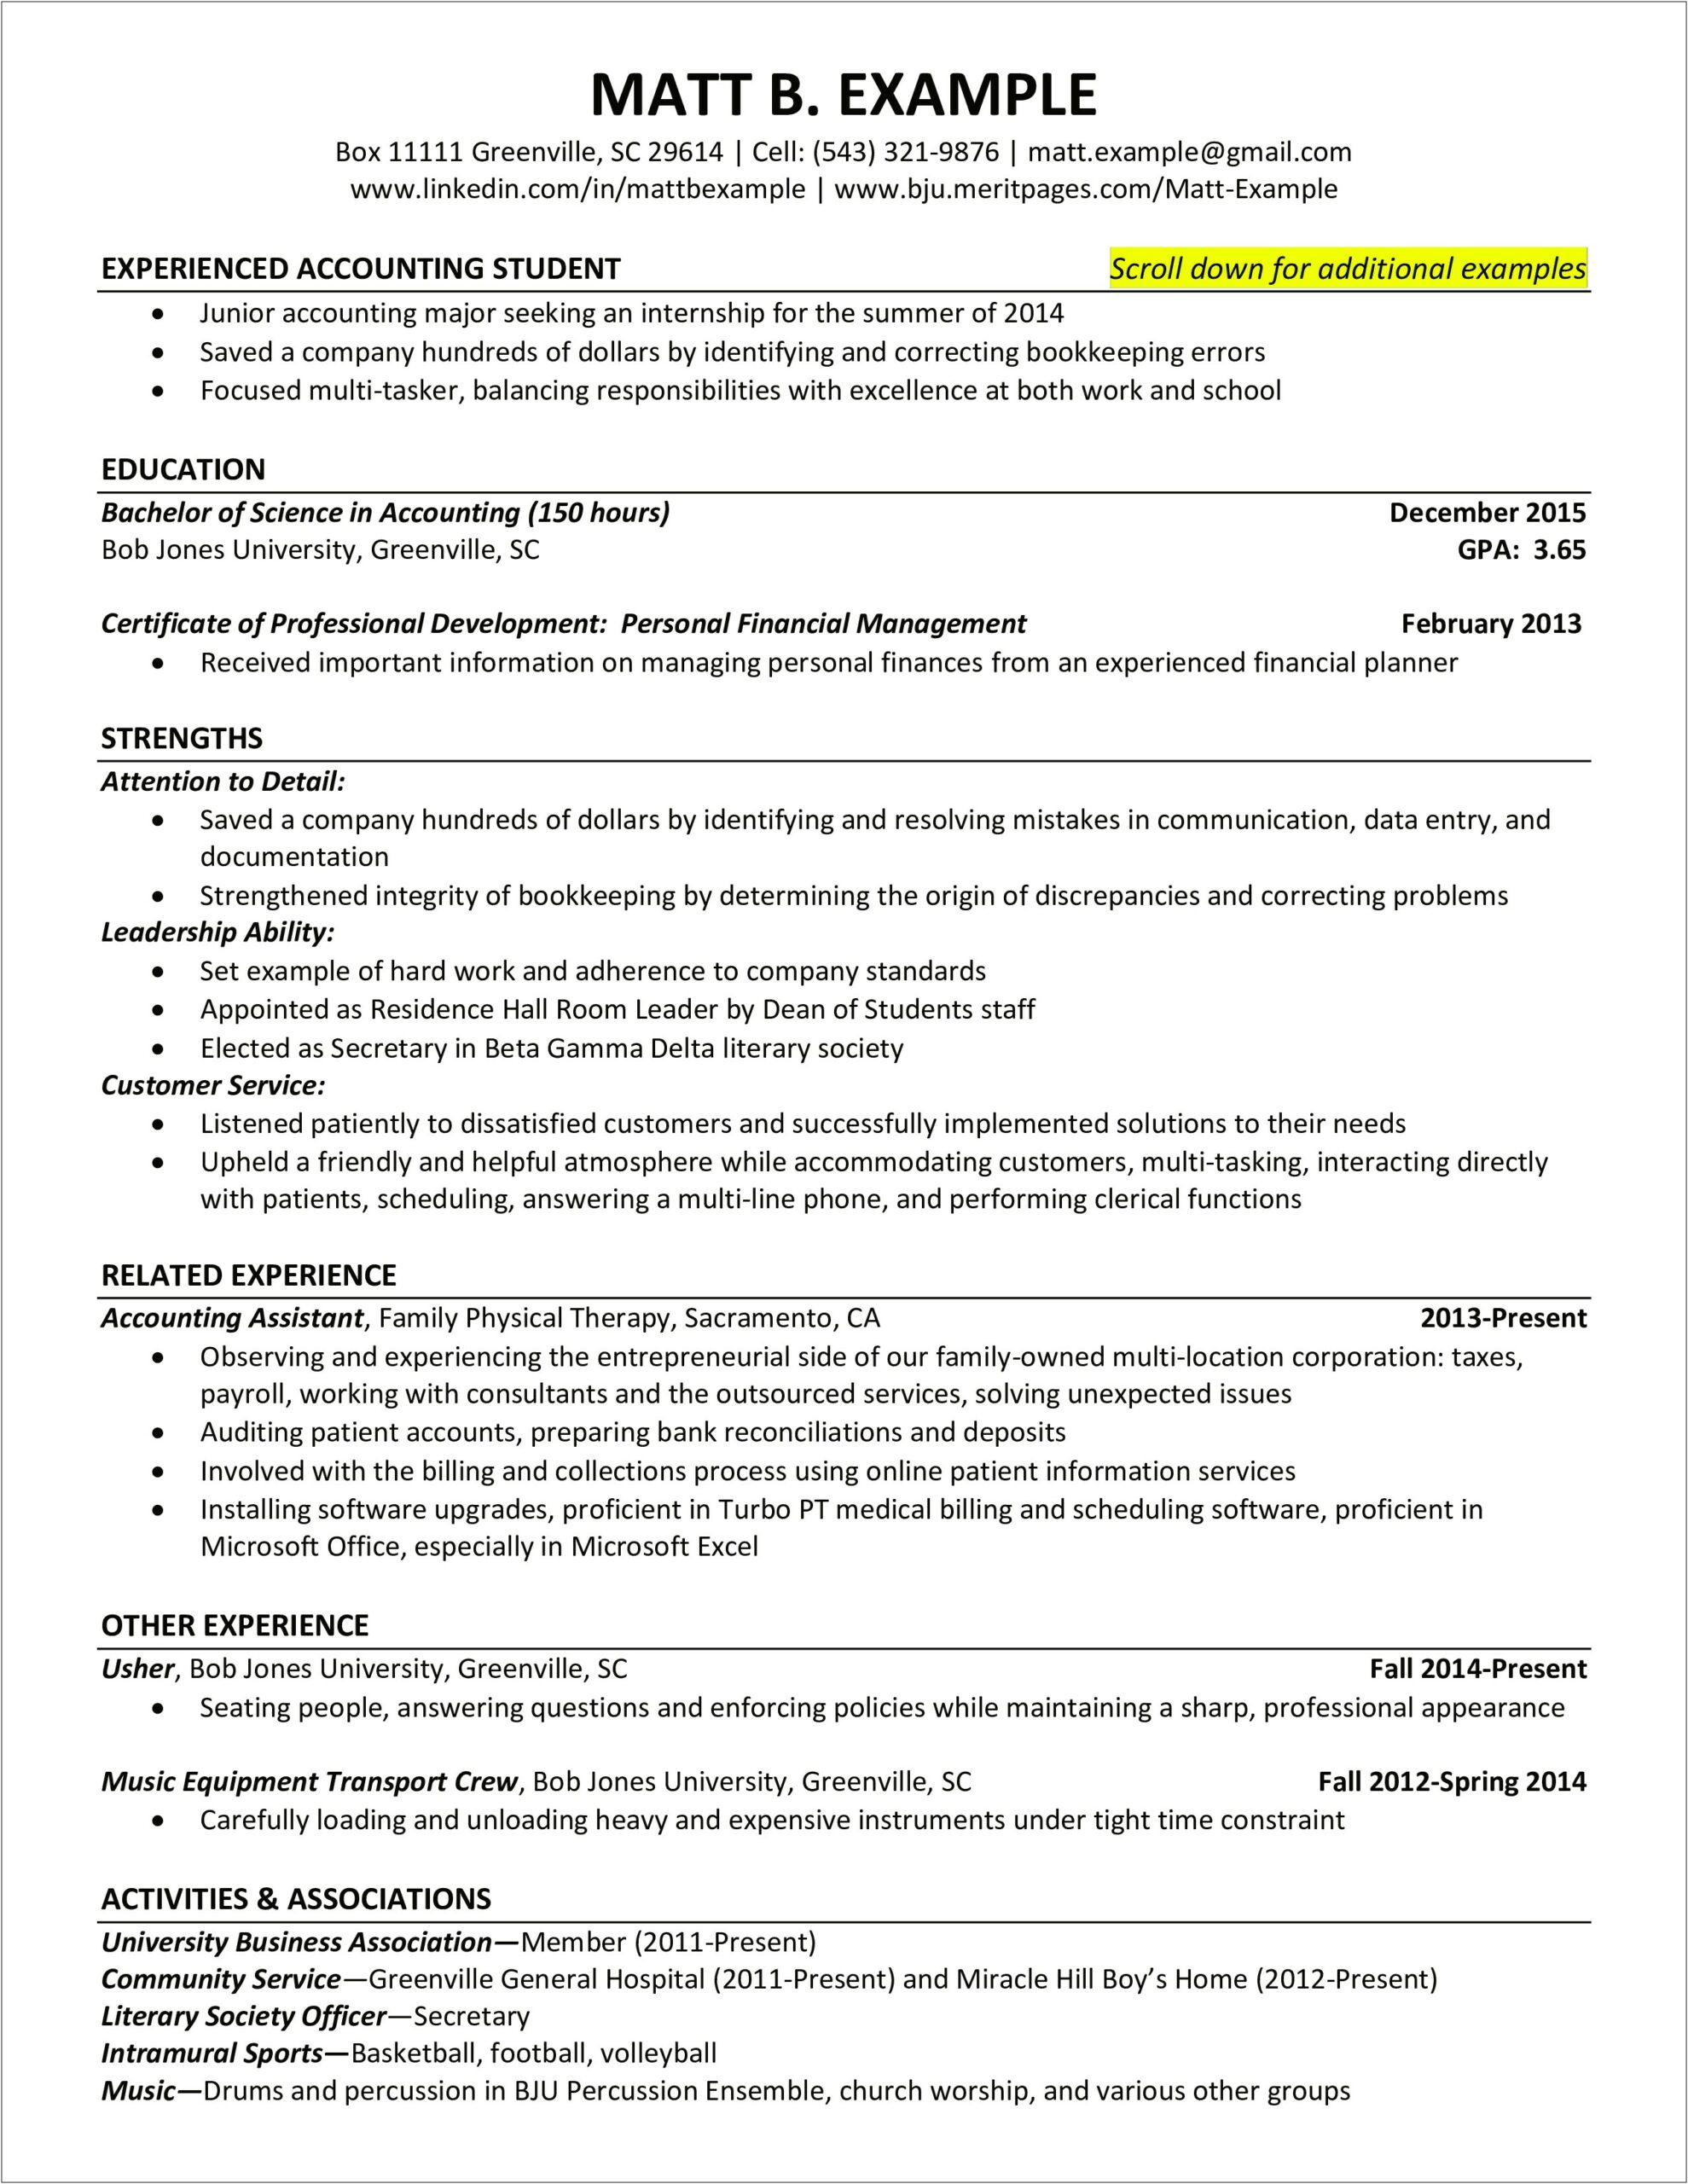 Sample Seasoned Accountant Resume Templates